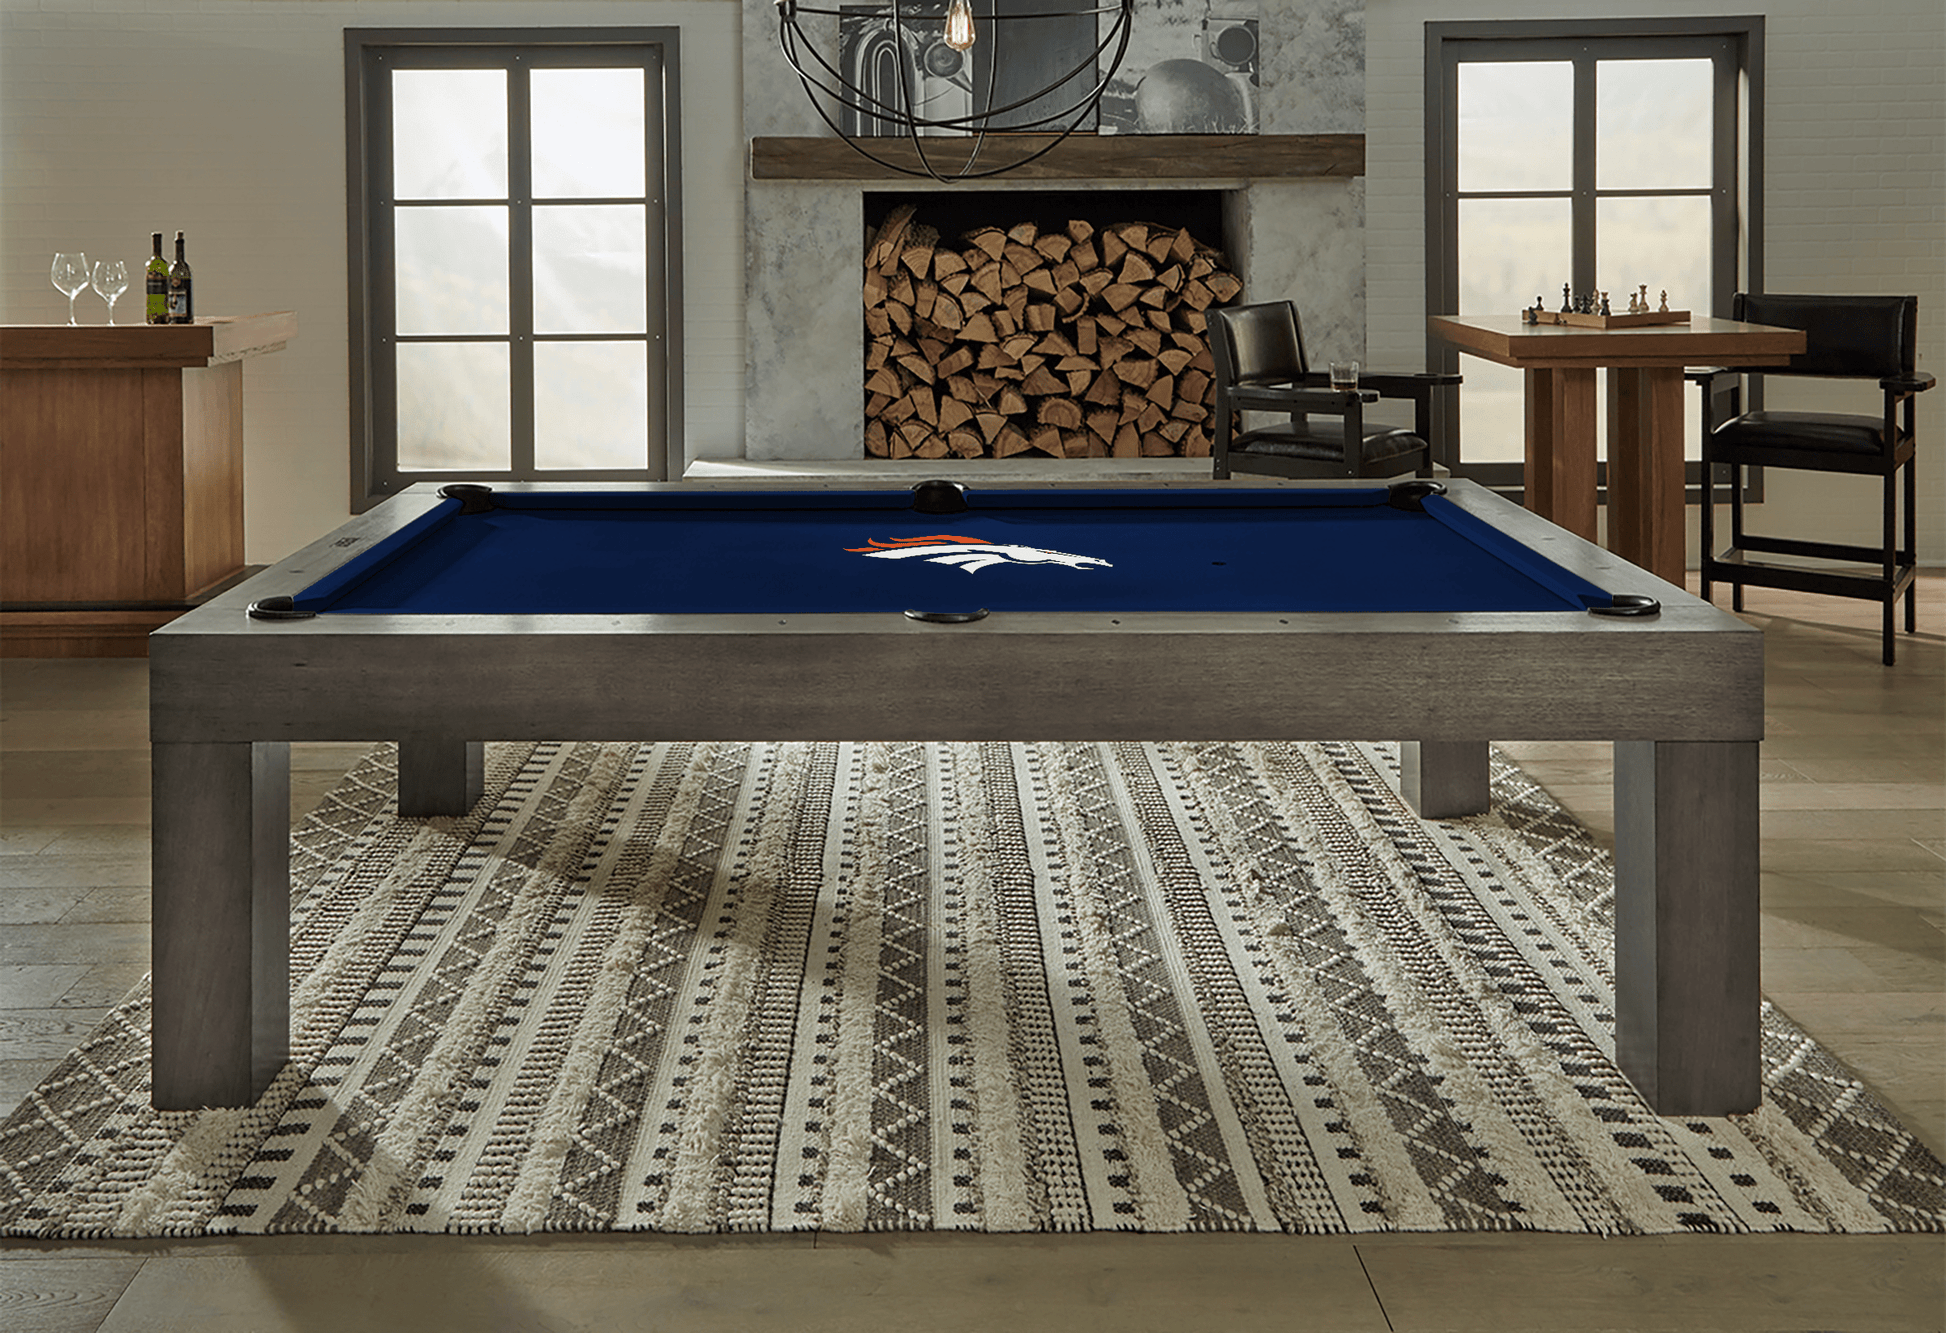 Denver Broncos Premium Pool Table Bundle - Walnut Pool Bundle Home Arcade Games   